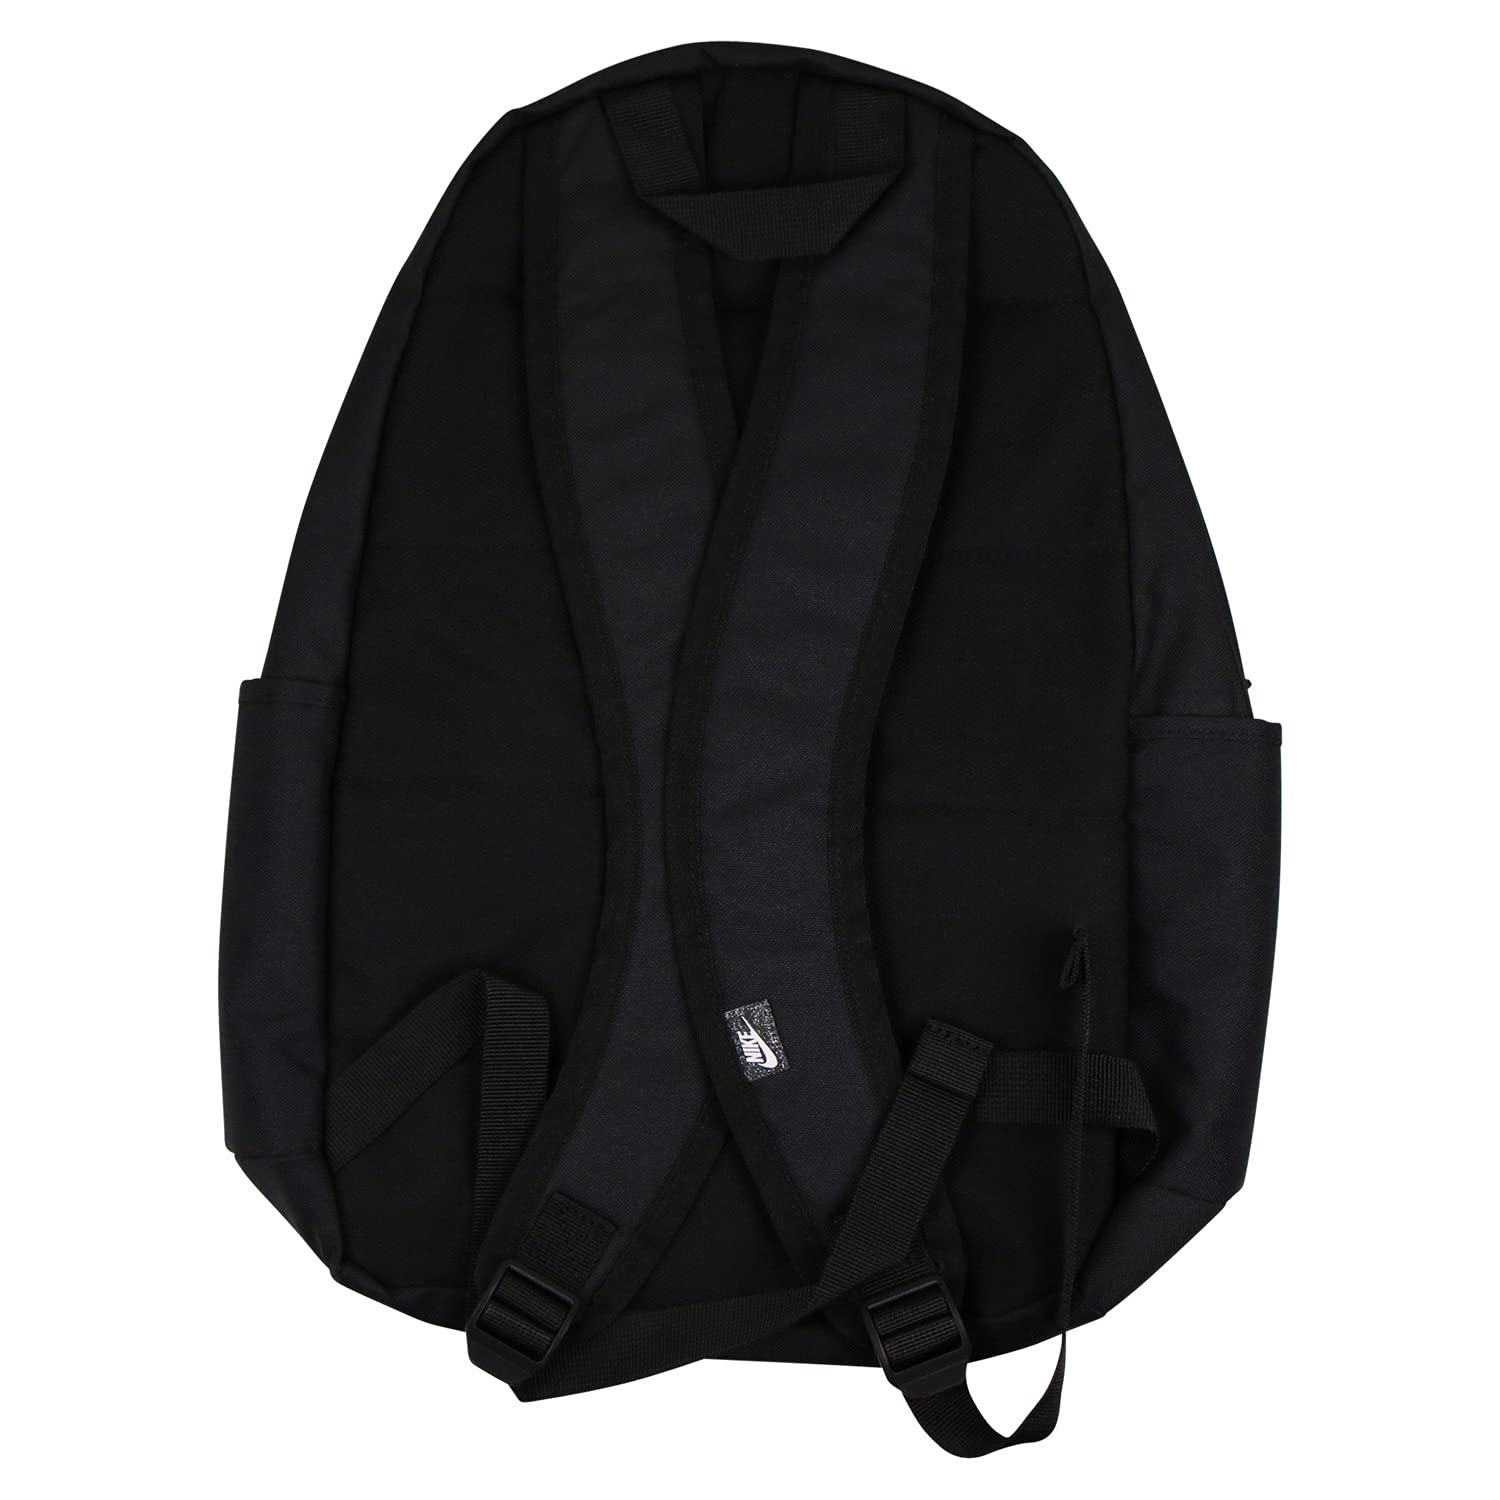 Nike Unisex Elemental Backpack (1er Pack)